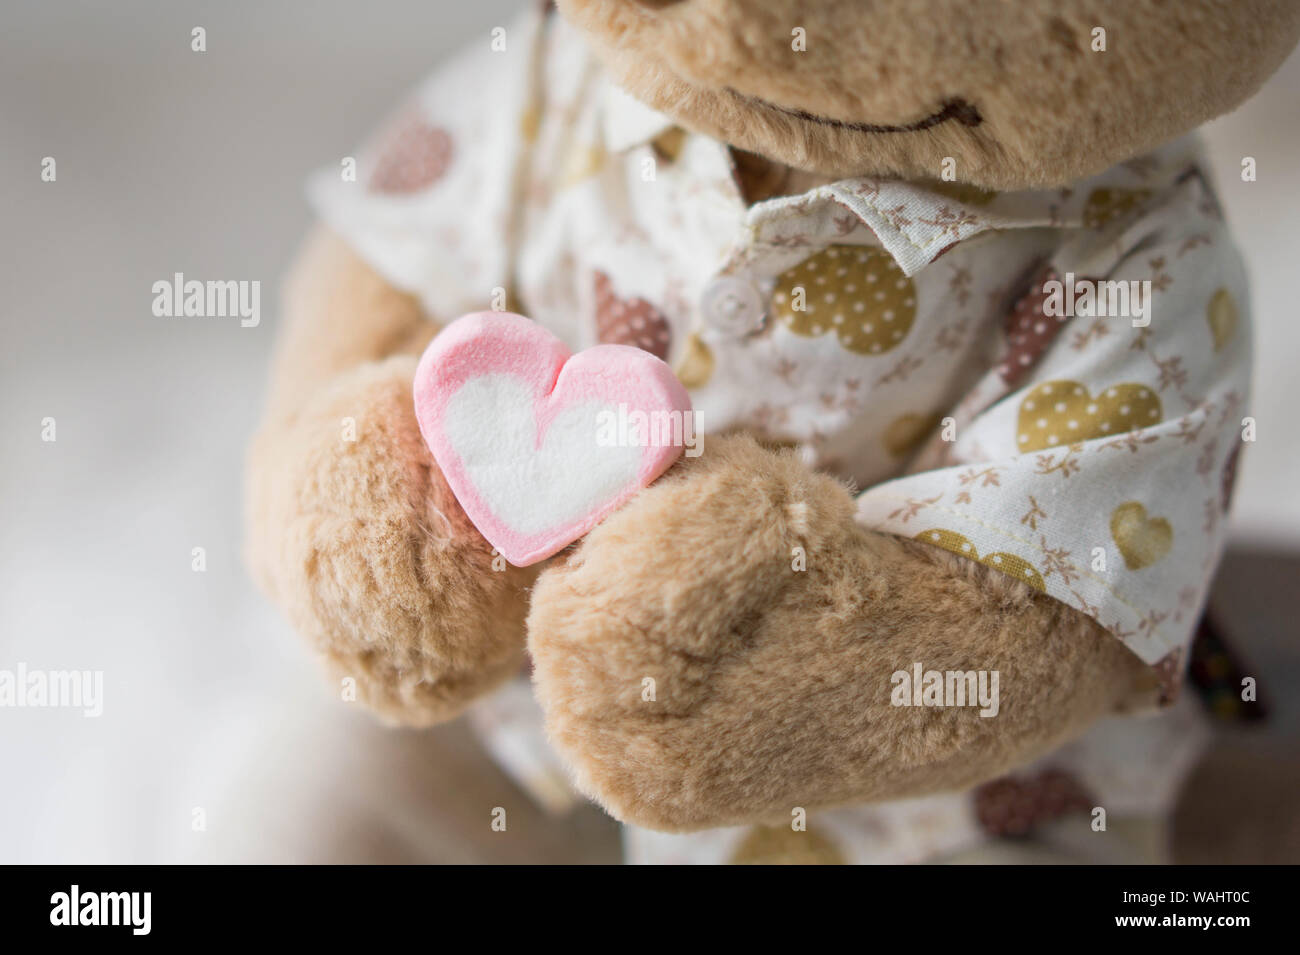 Brown Teddy bear holding pink heart shape marshmallow Stock Photo